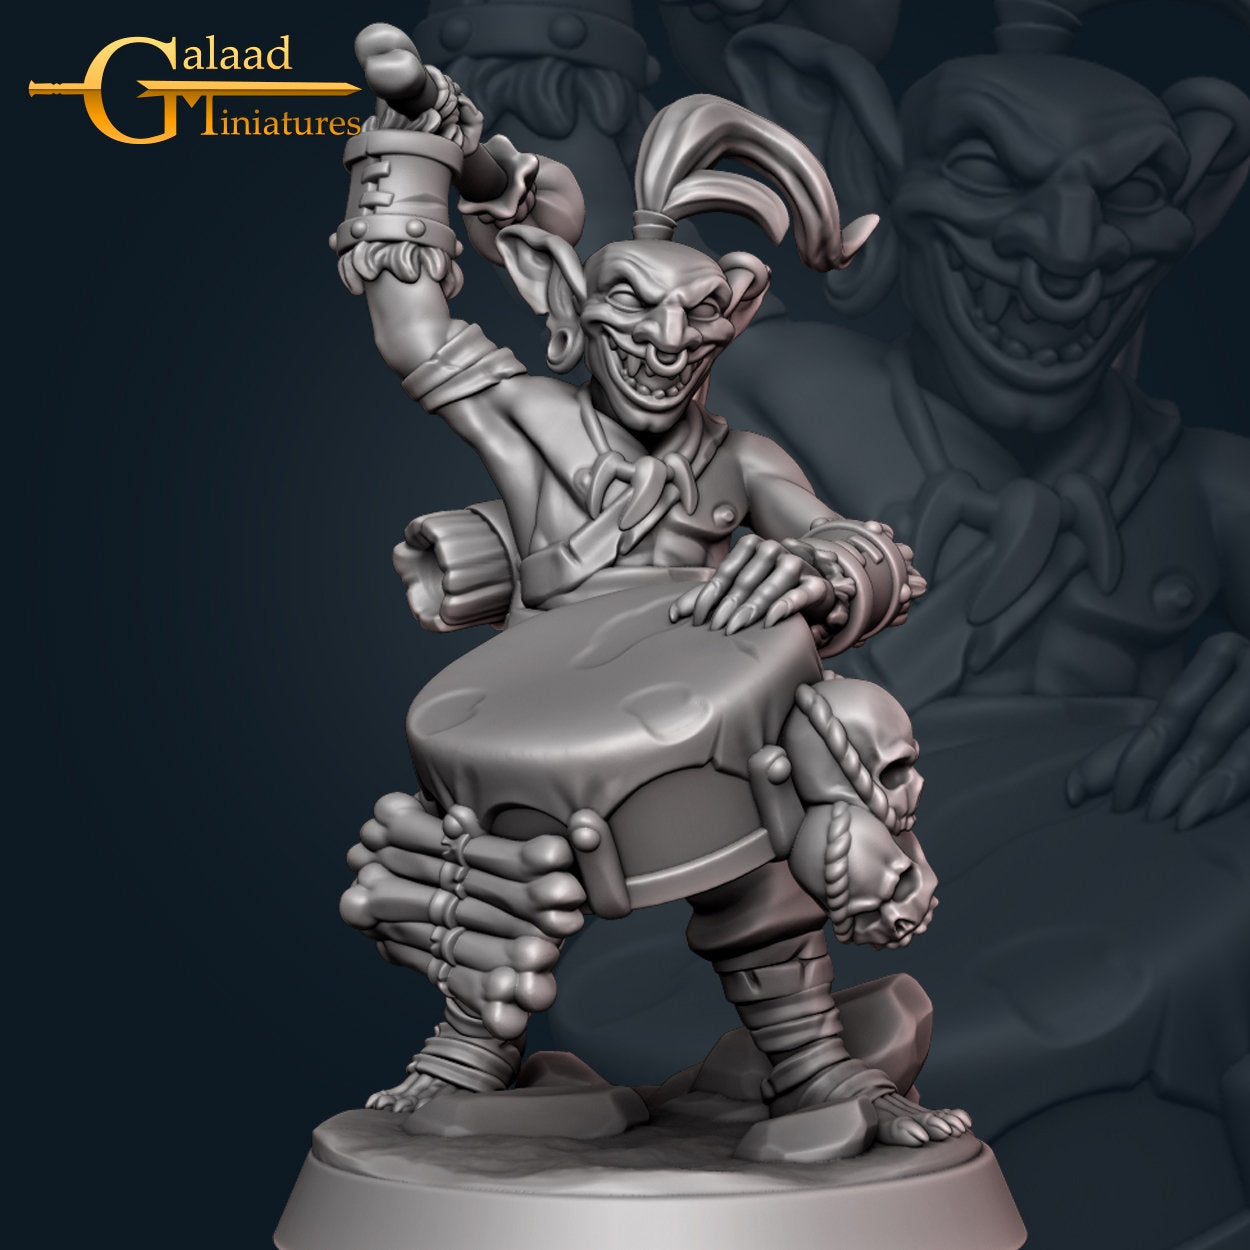 Goblin Bard D&D miniature, by Galaad Miniatures // 3D Print on Demand / DnD / Pathfinder / RPG